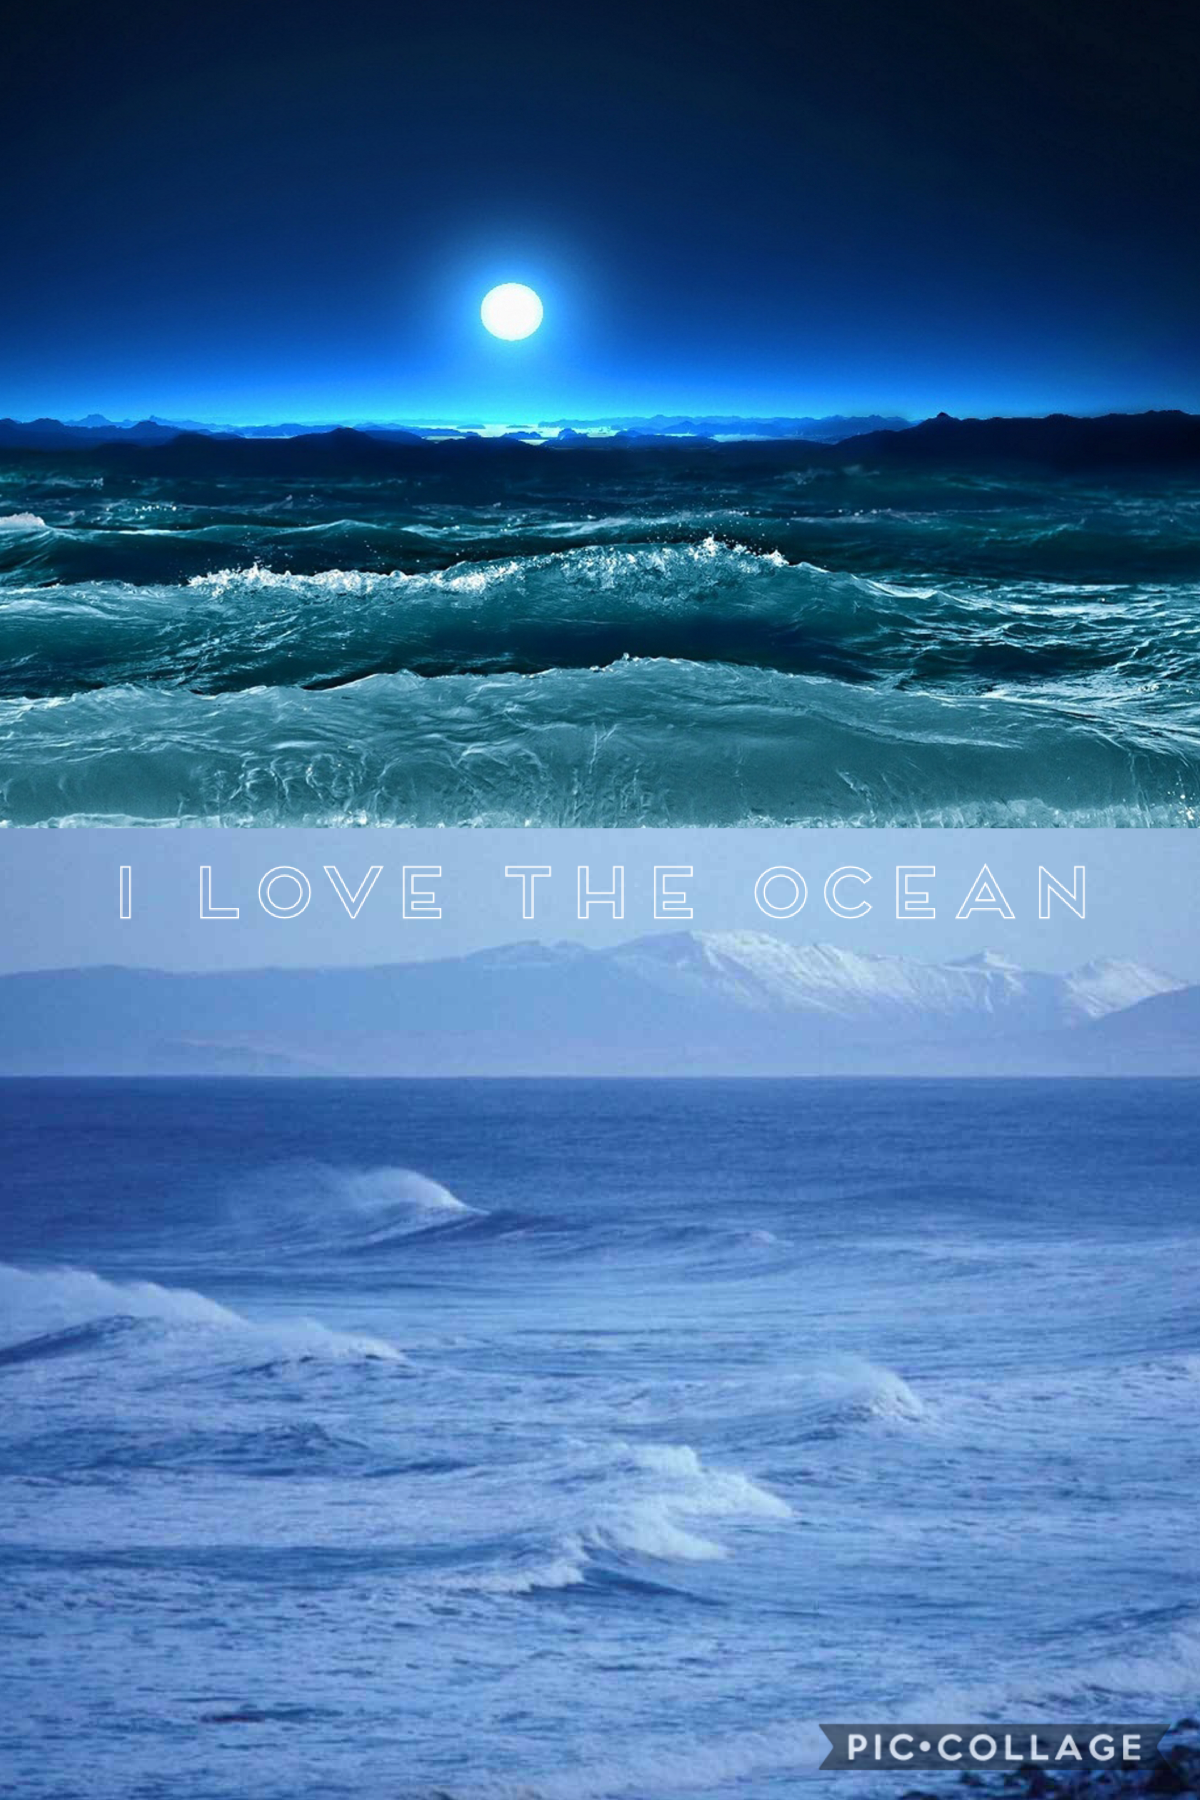 I love the ocean 🌊 